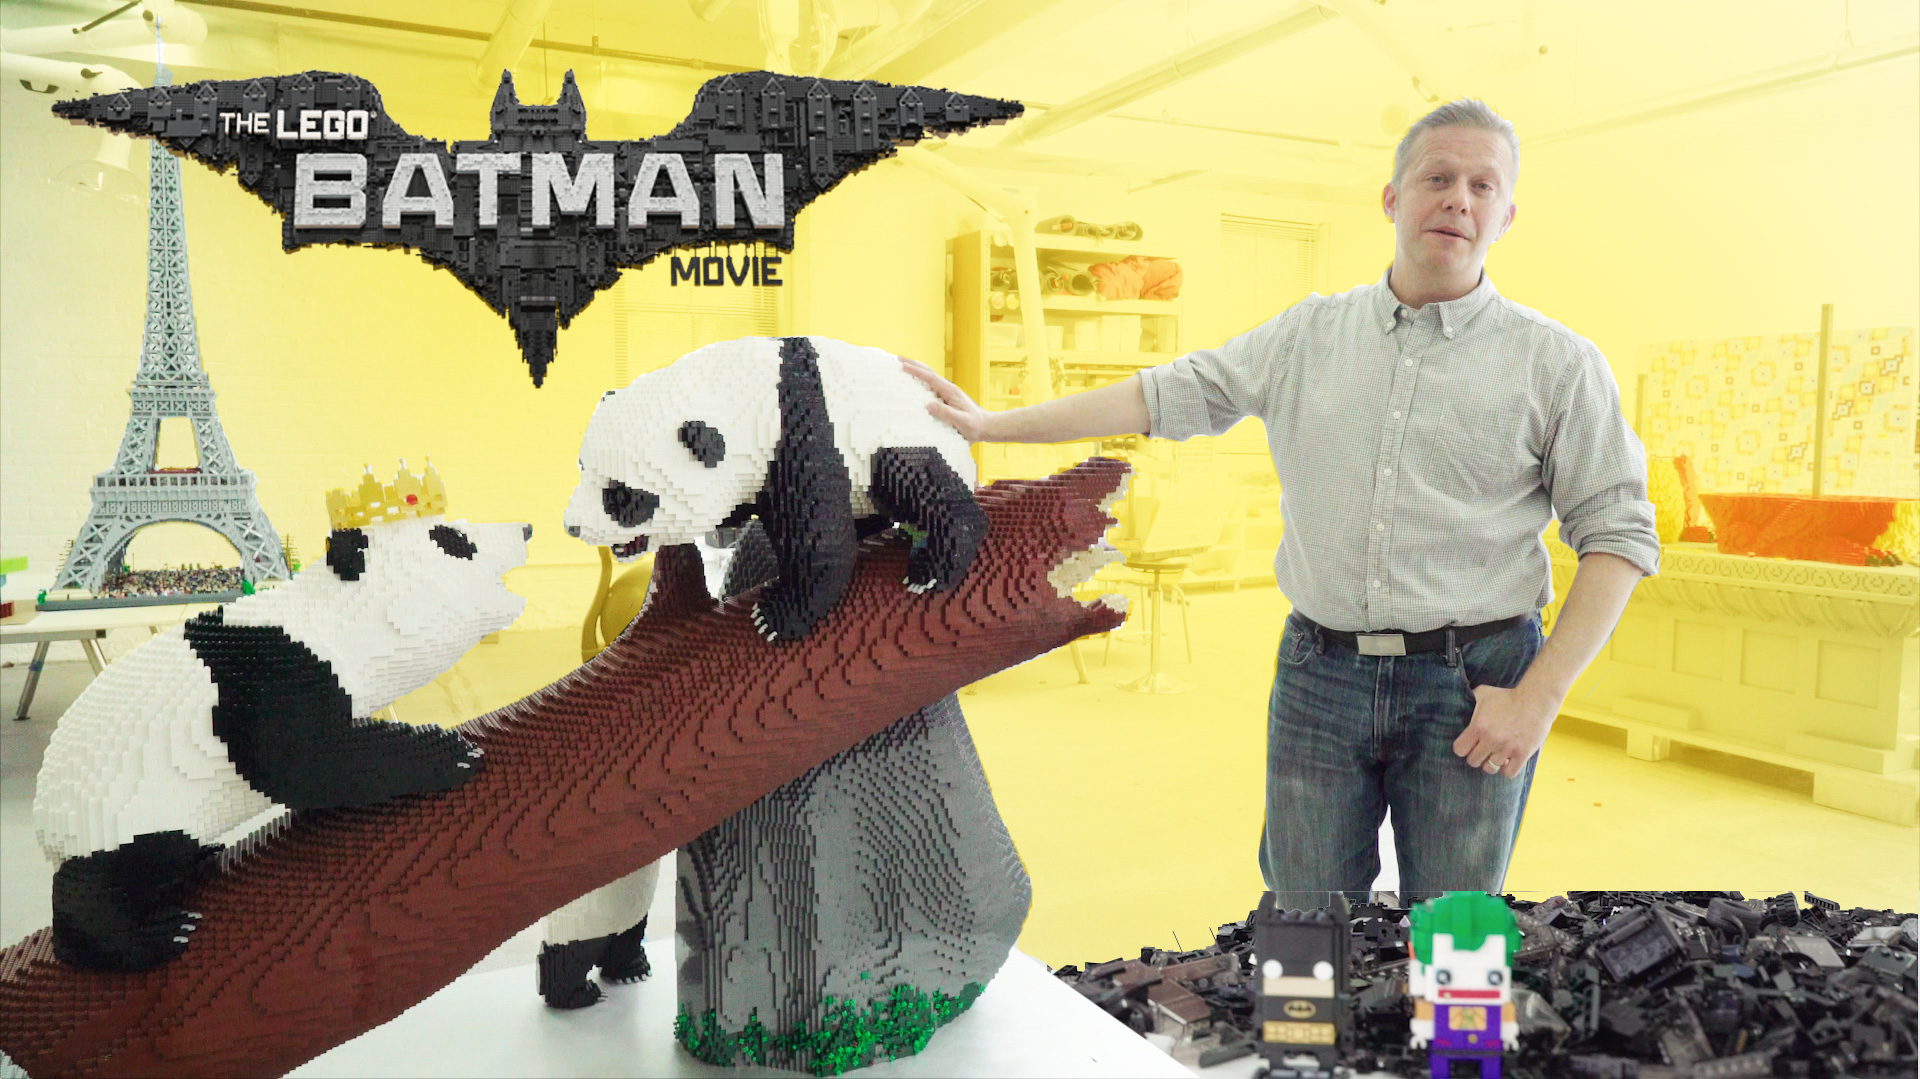 The-lego-batman-movie-sean-kenney-builds-episode-1-the-batmobile LEGO art by Sean Kenney